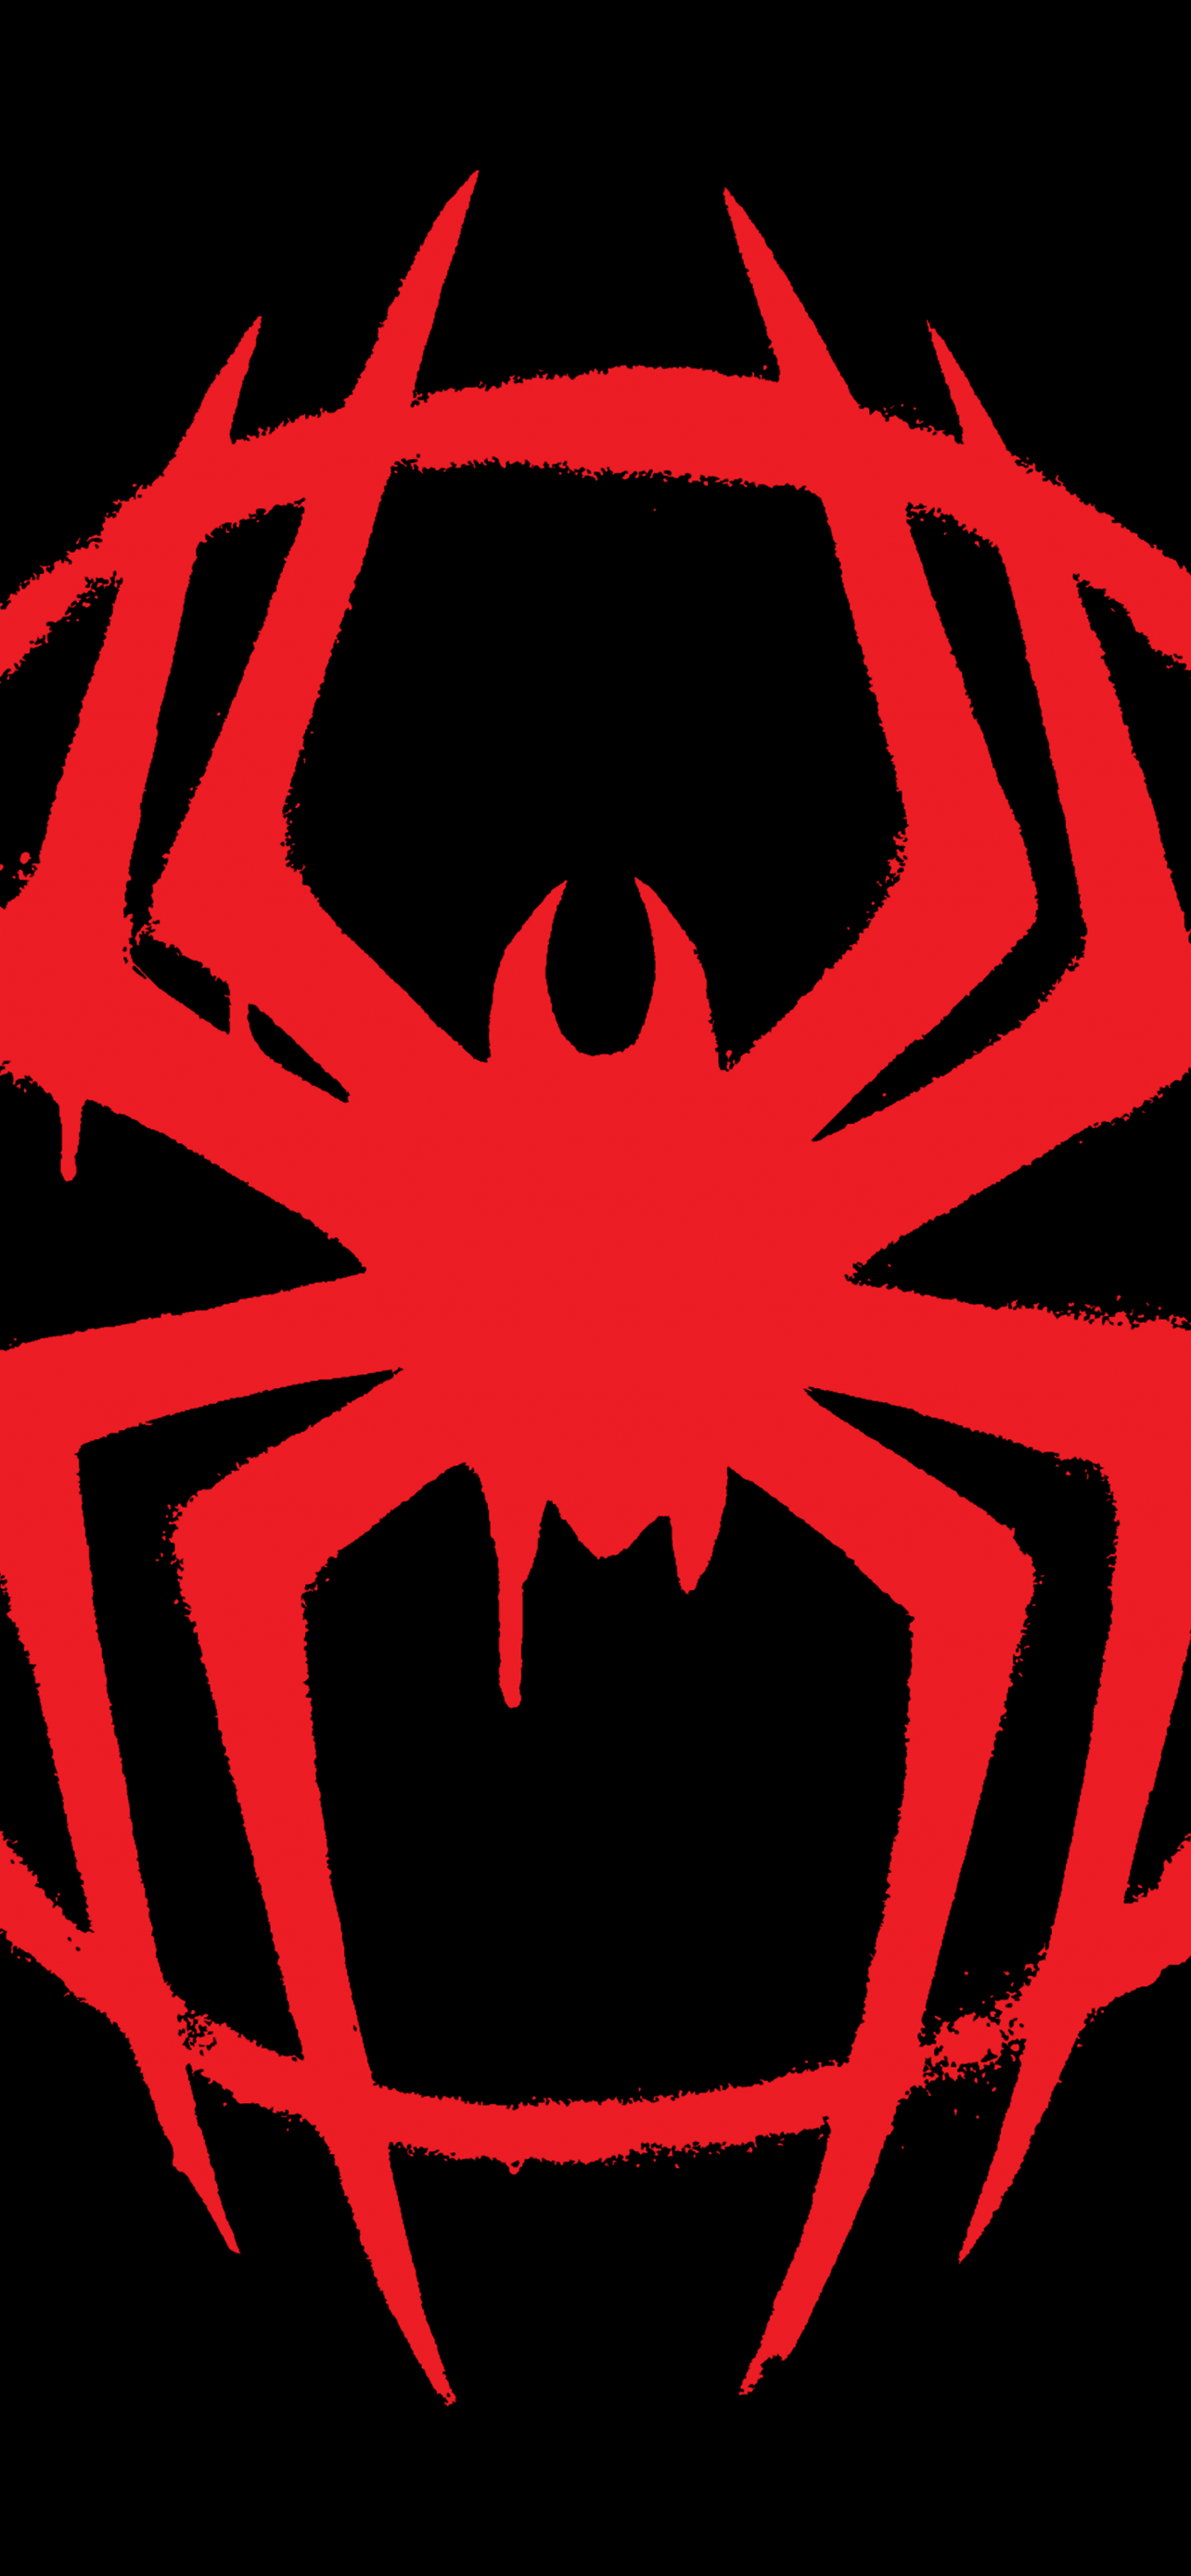 Download Spider Man Logo Black Aesthetic Wallpaper | Wallpapers.com